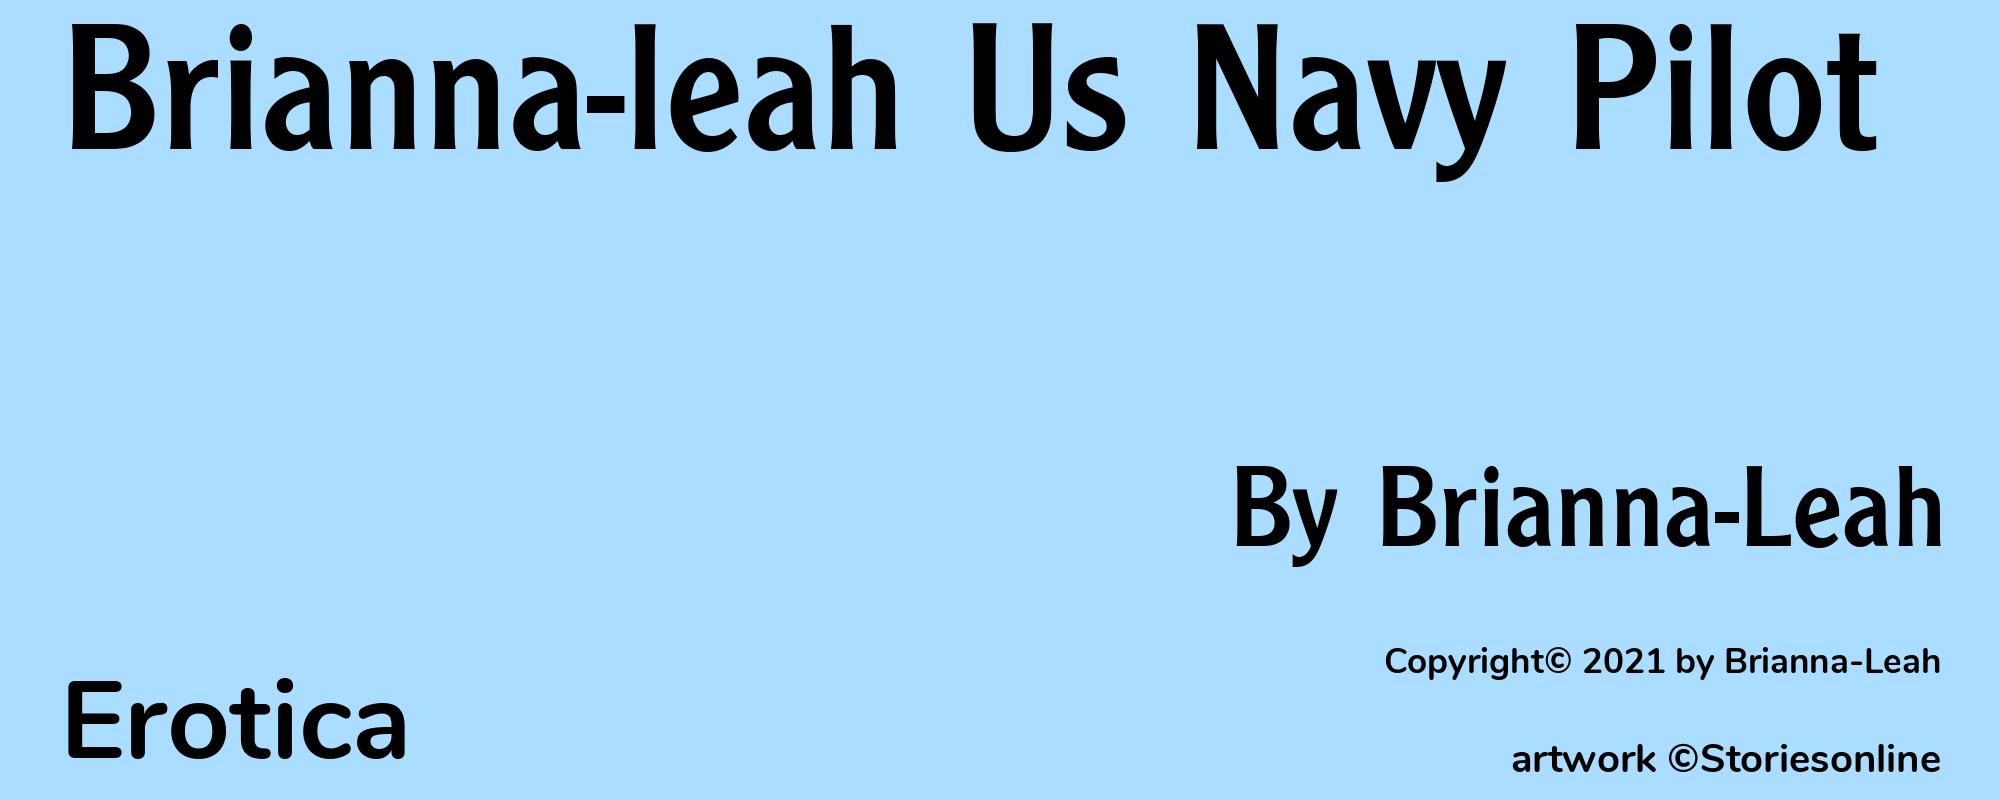 Brianna-leah Us Navy Pilot - Cover